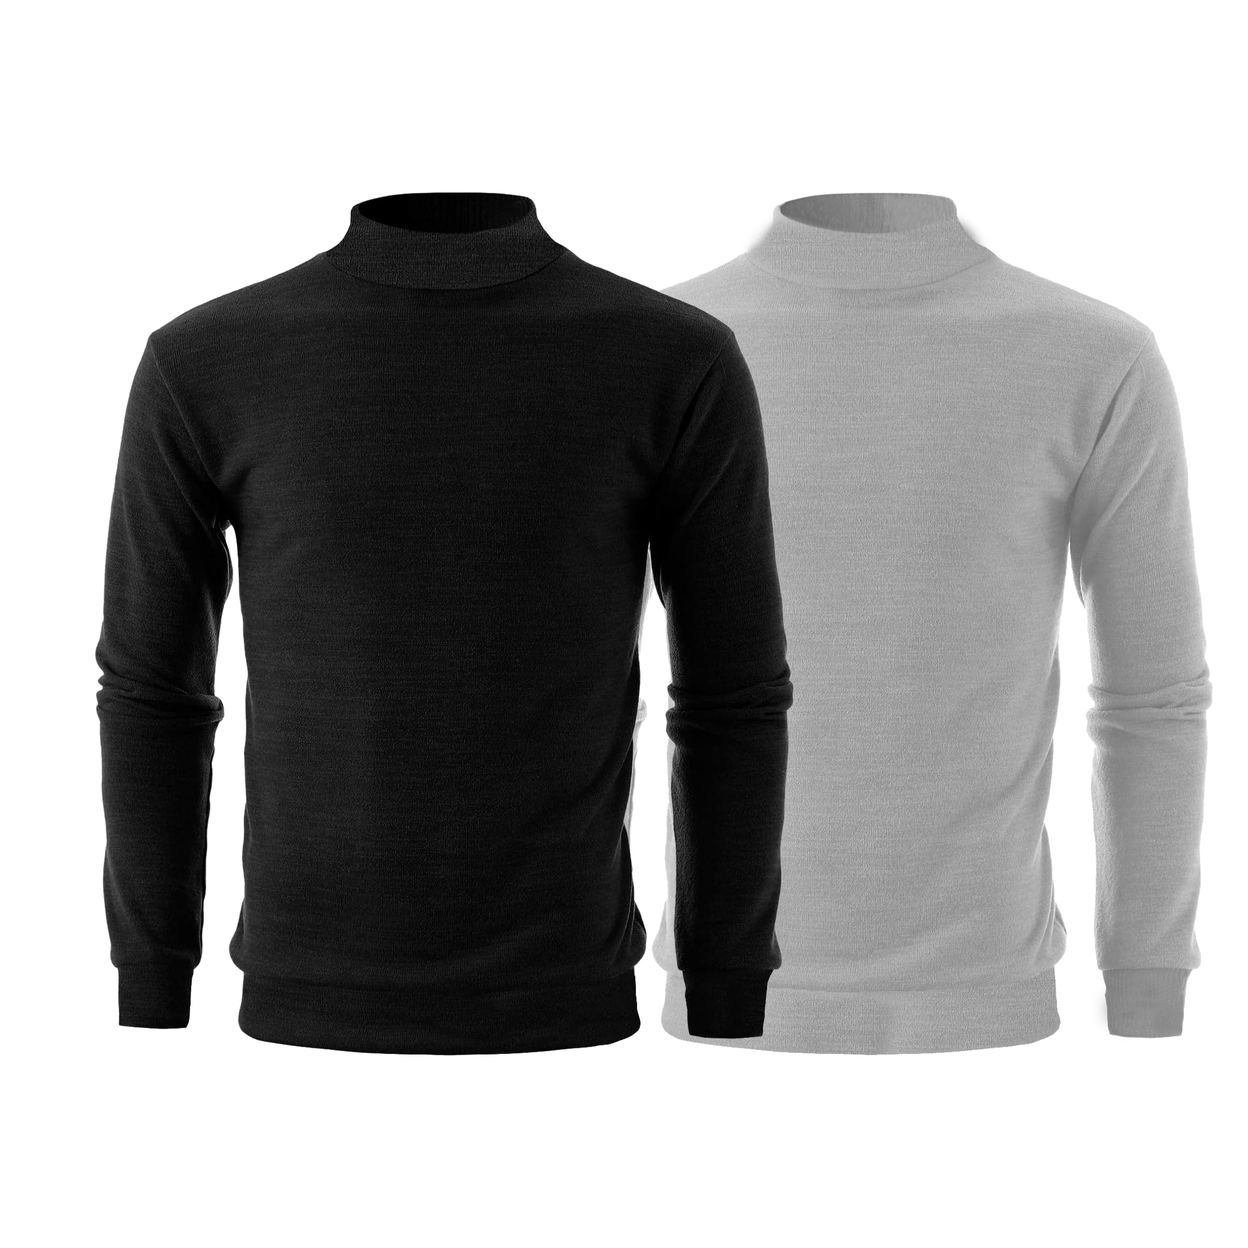 2-Pack: Men's Winter Warm Cozy Knit Slim Fit Mock Neck Sweater - White & Grey, Large